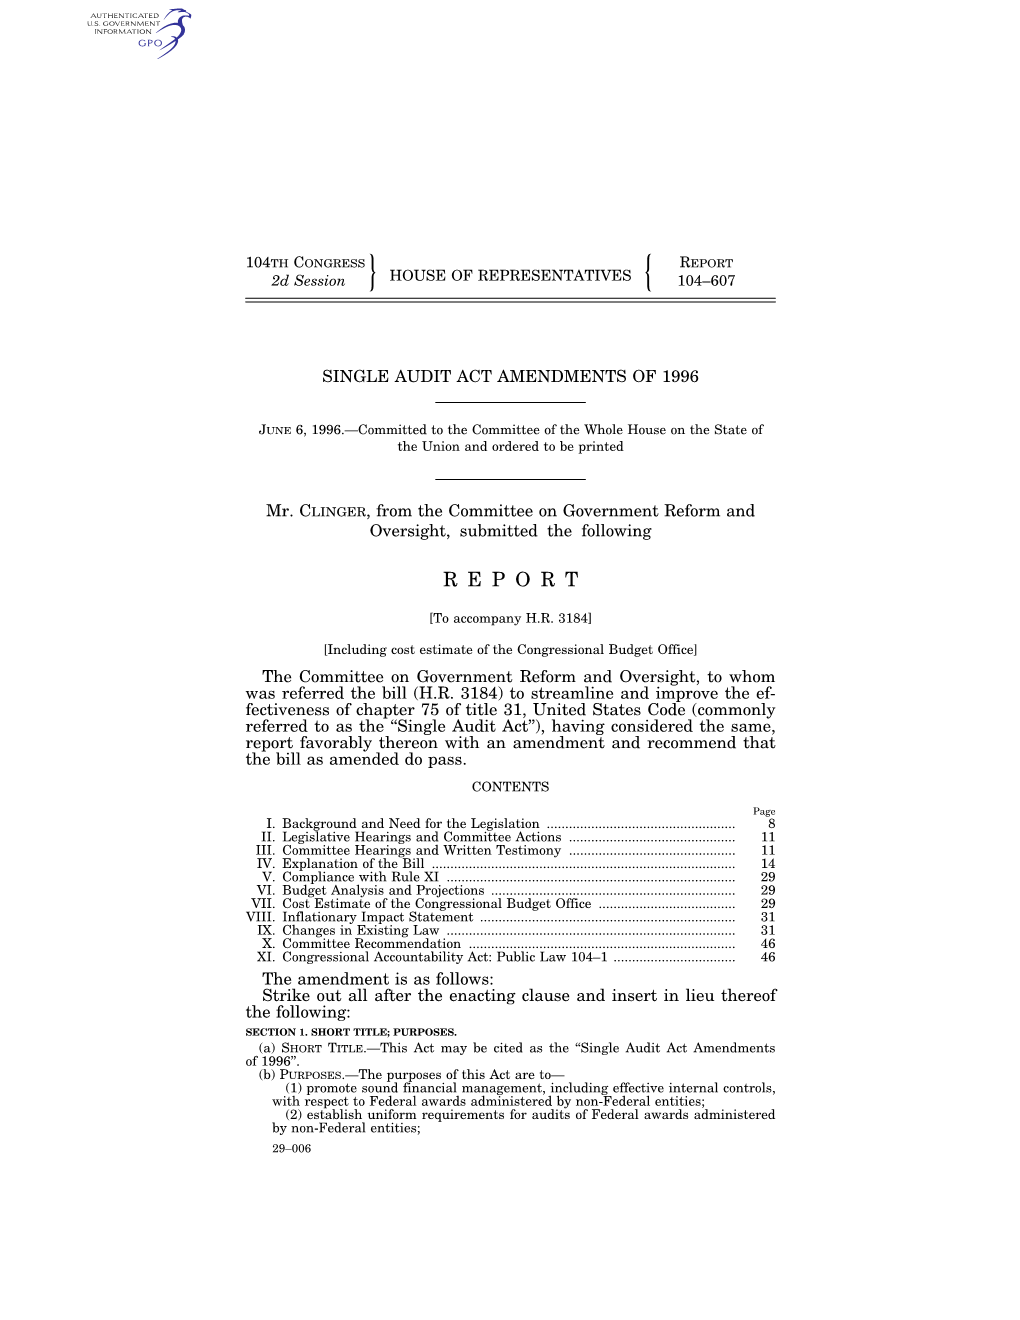 Single Audit Act Amendments of 1996